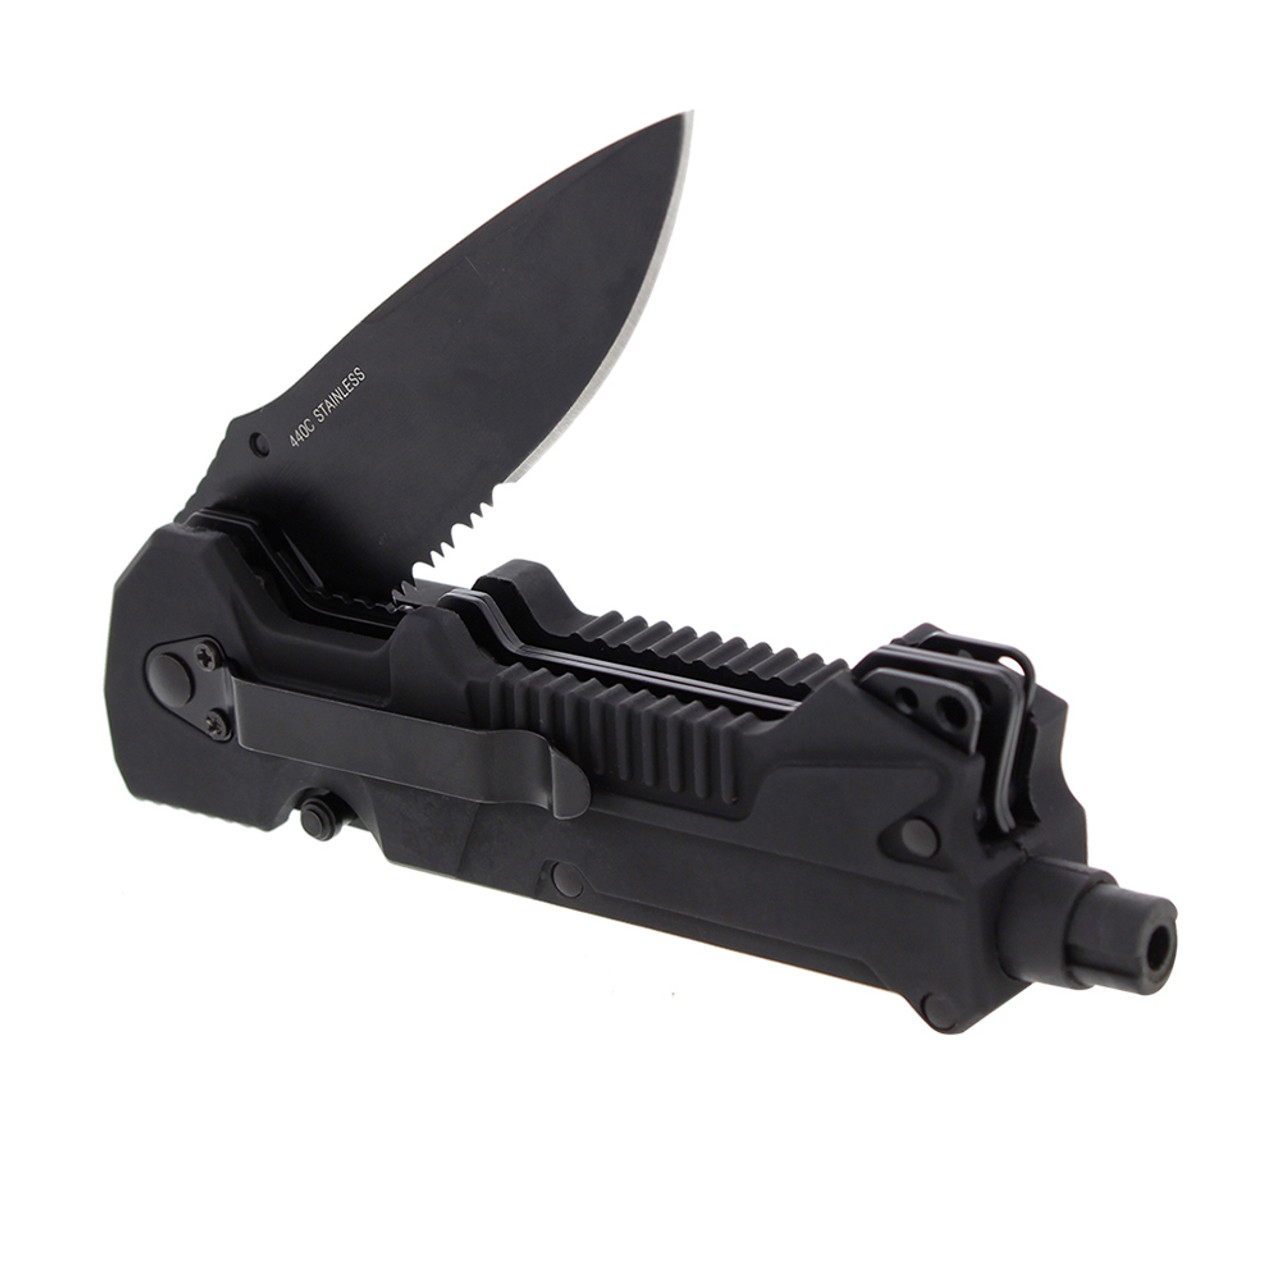 StatGear T3 Tactical Auto Rescue Tool w/ LED Light Black 440C Folding Knife  01